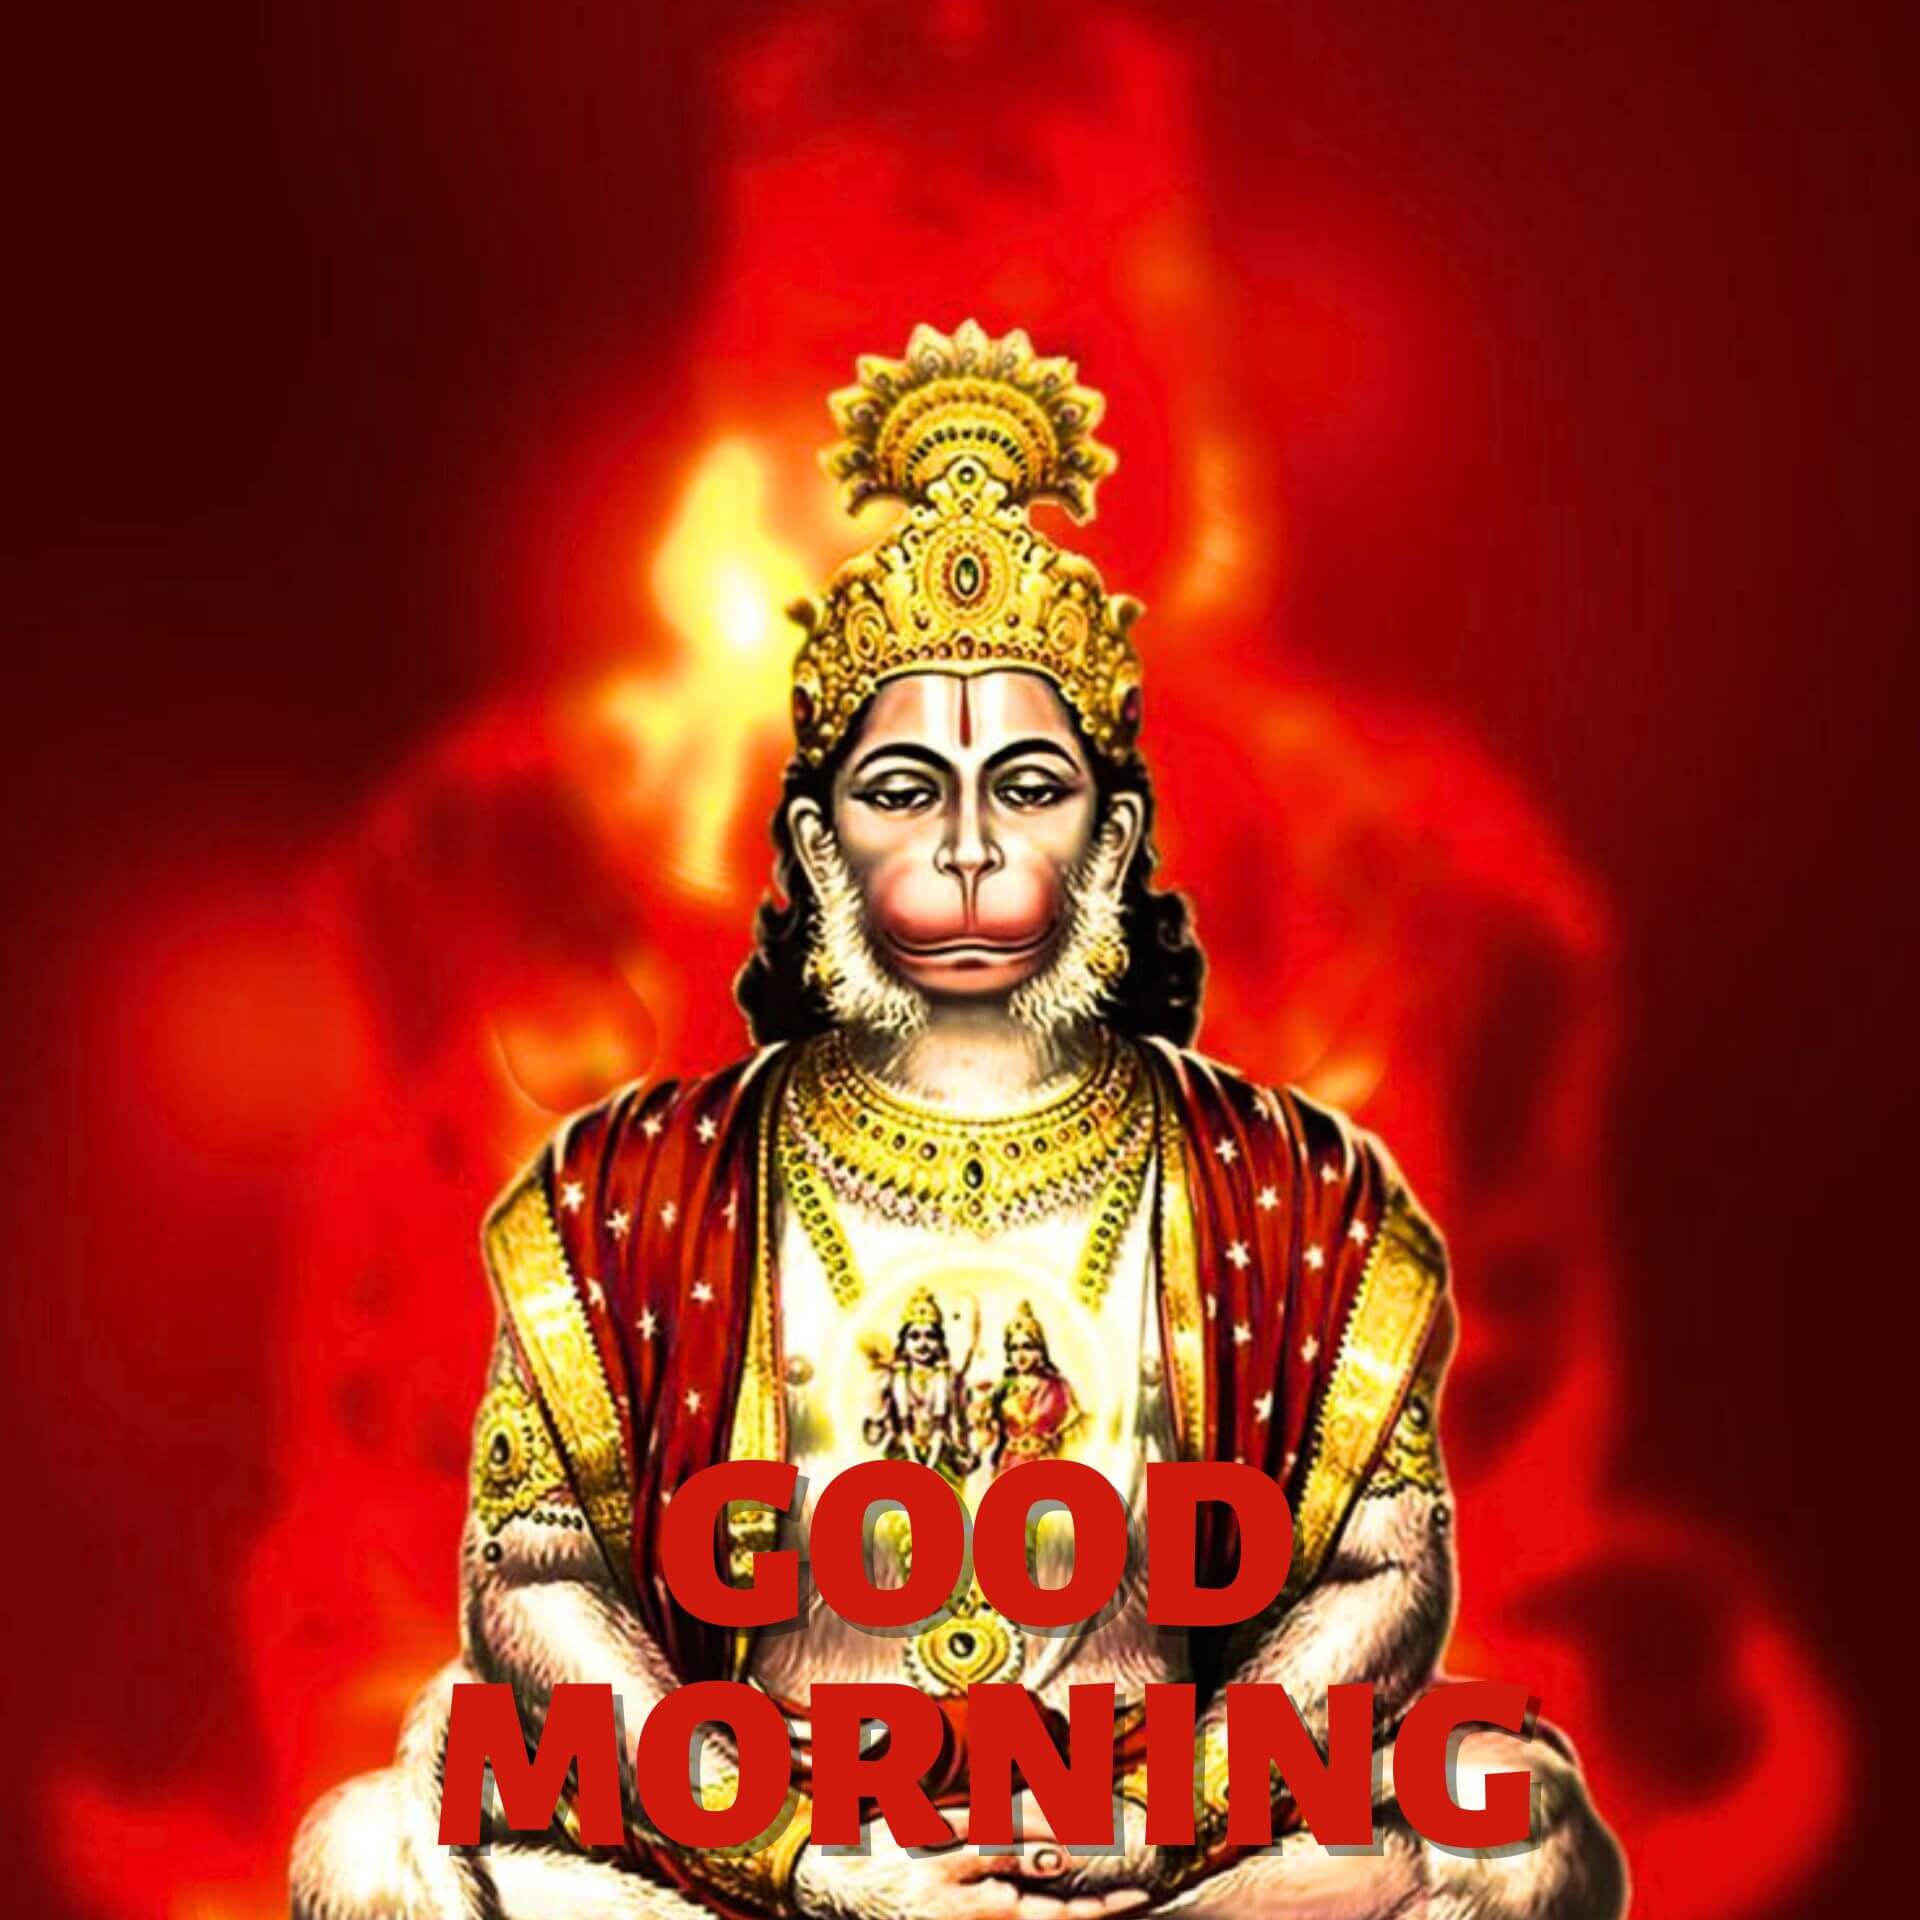 hanuman ji good morning Wallpaper Pics Free for Facebook